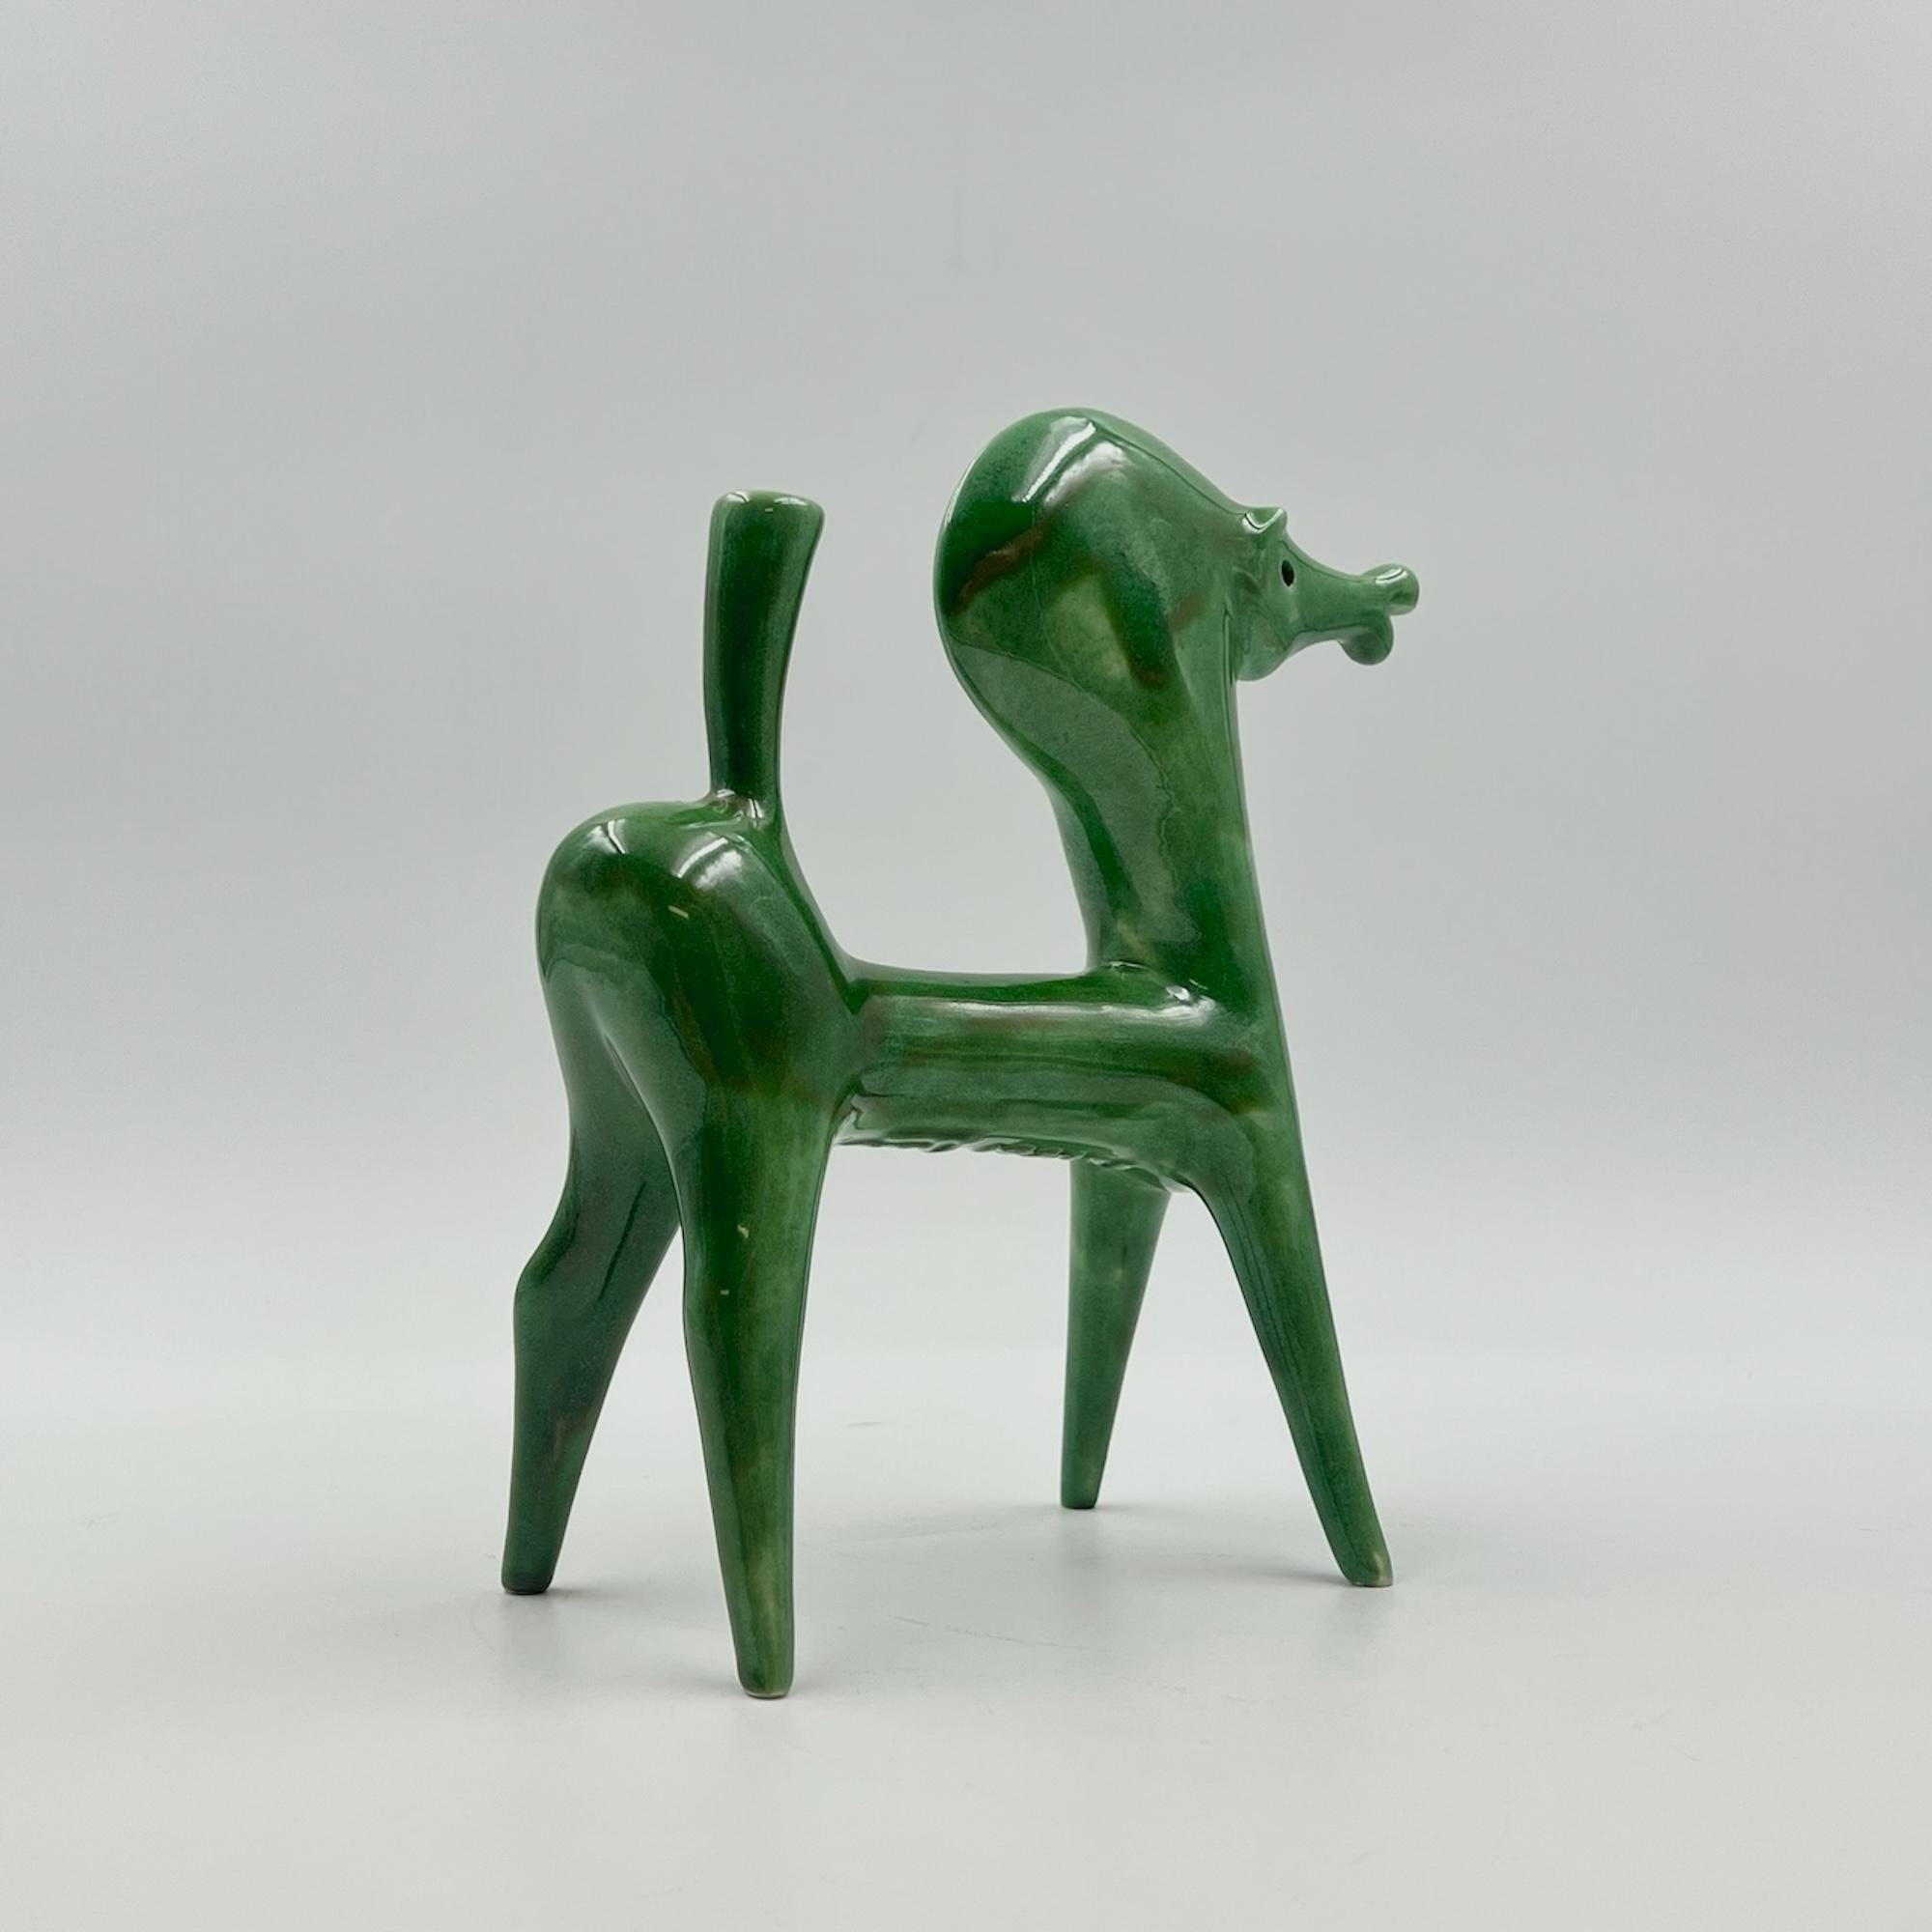 Green Ceramic Horse Figurine - 1970s Handmade Sculpture by Roberto Rigon Italy  For Sale 1